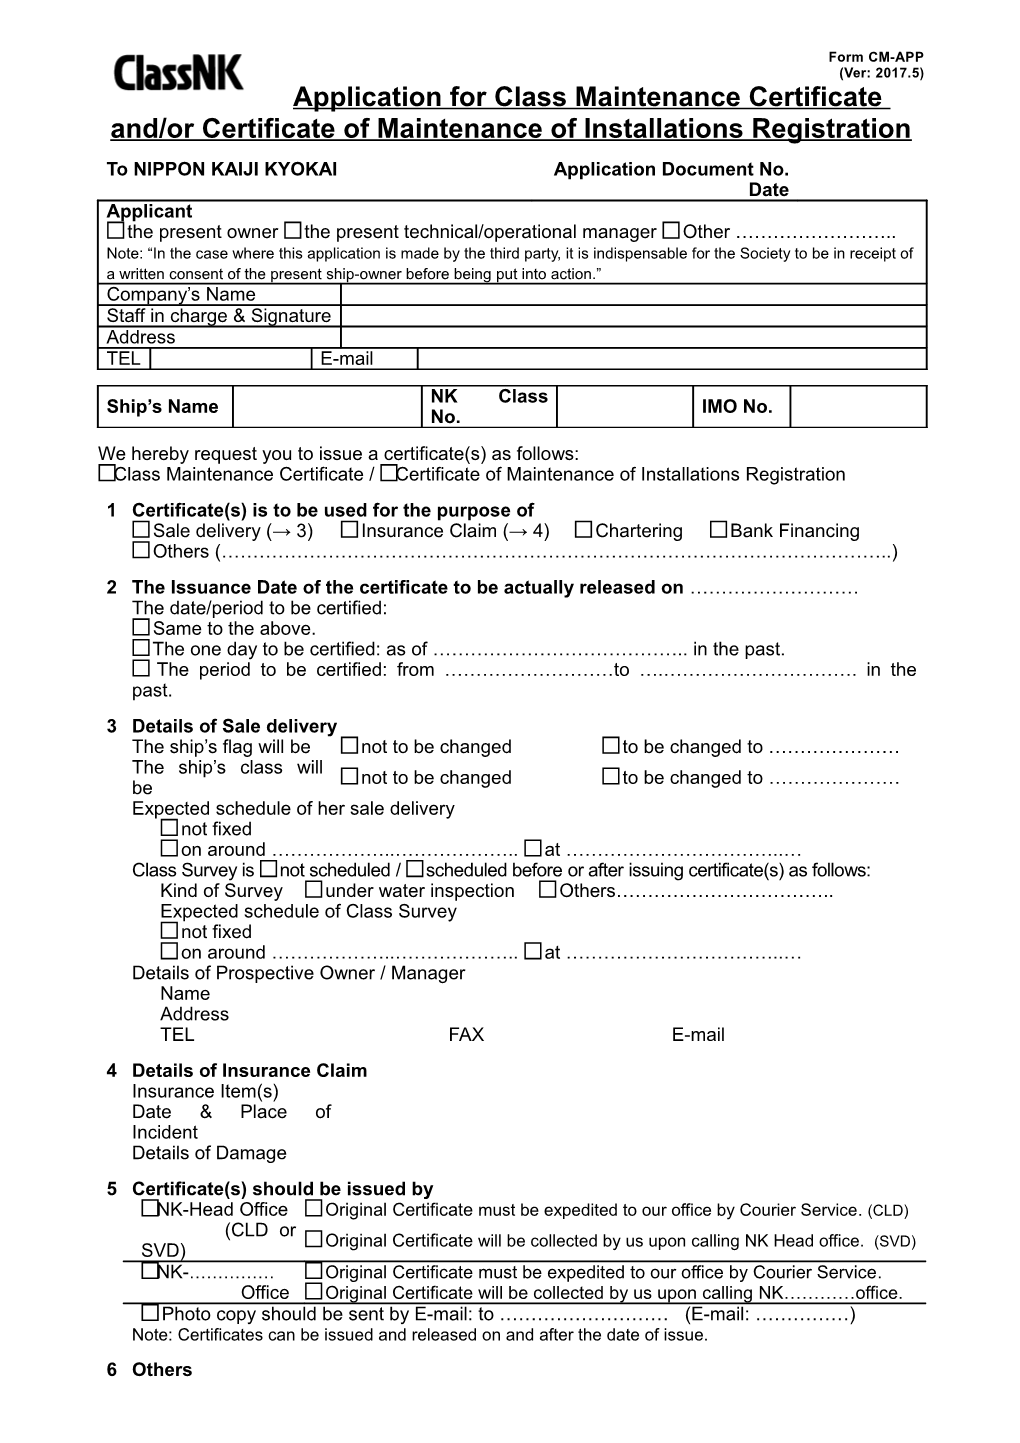 Application for Class Maintenance Certificate